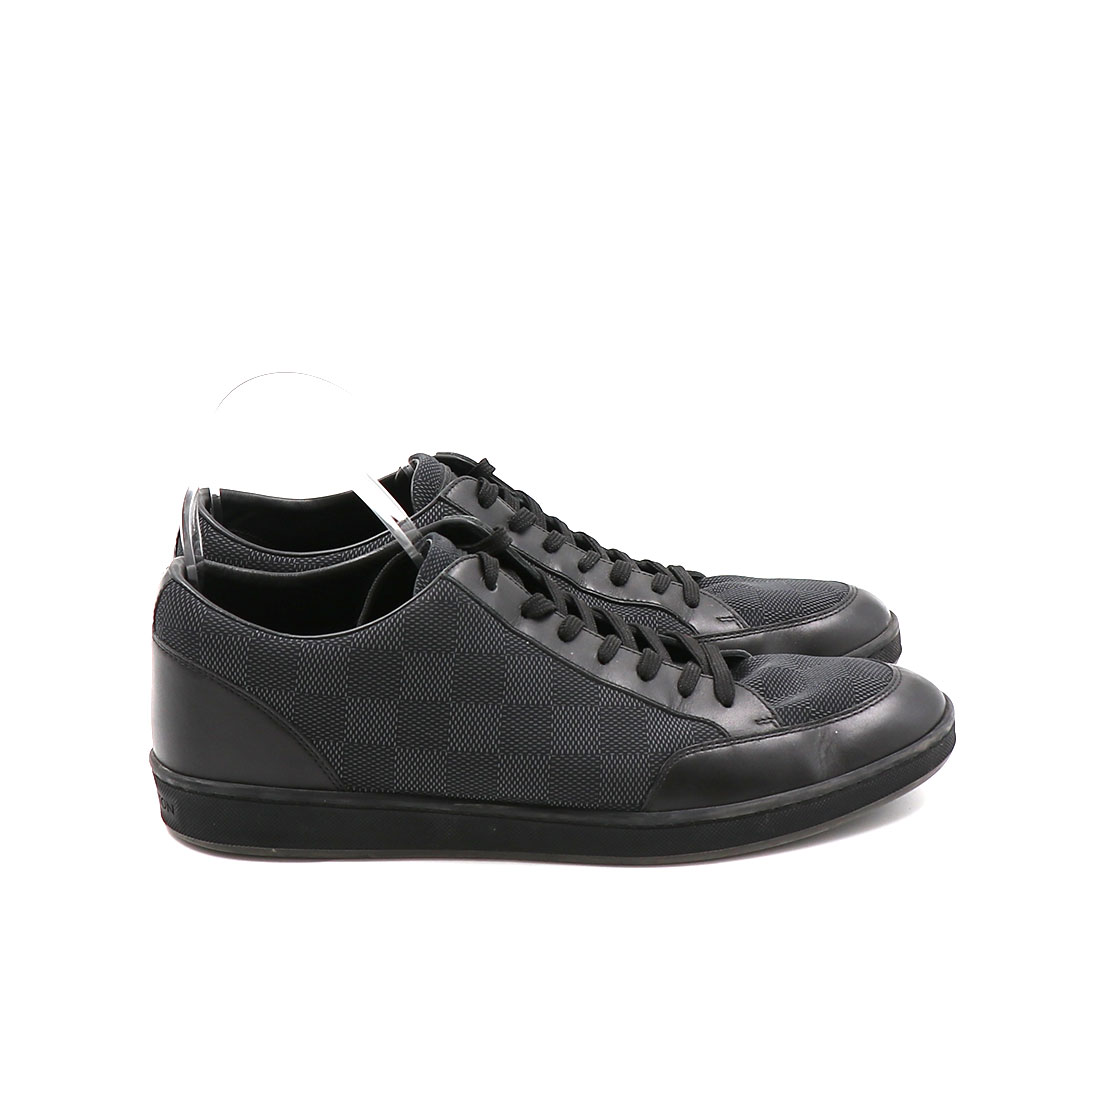 ✓ Louis Vuitton sneaker graphite damier nylon leather 6 LV 7 US